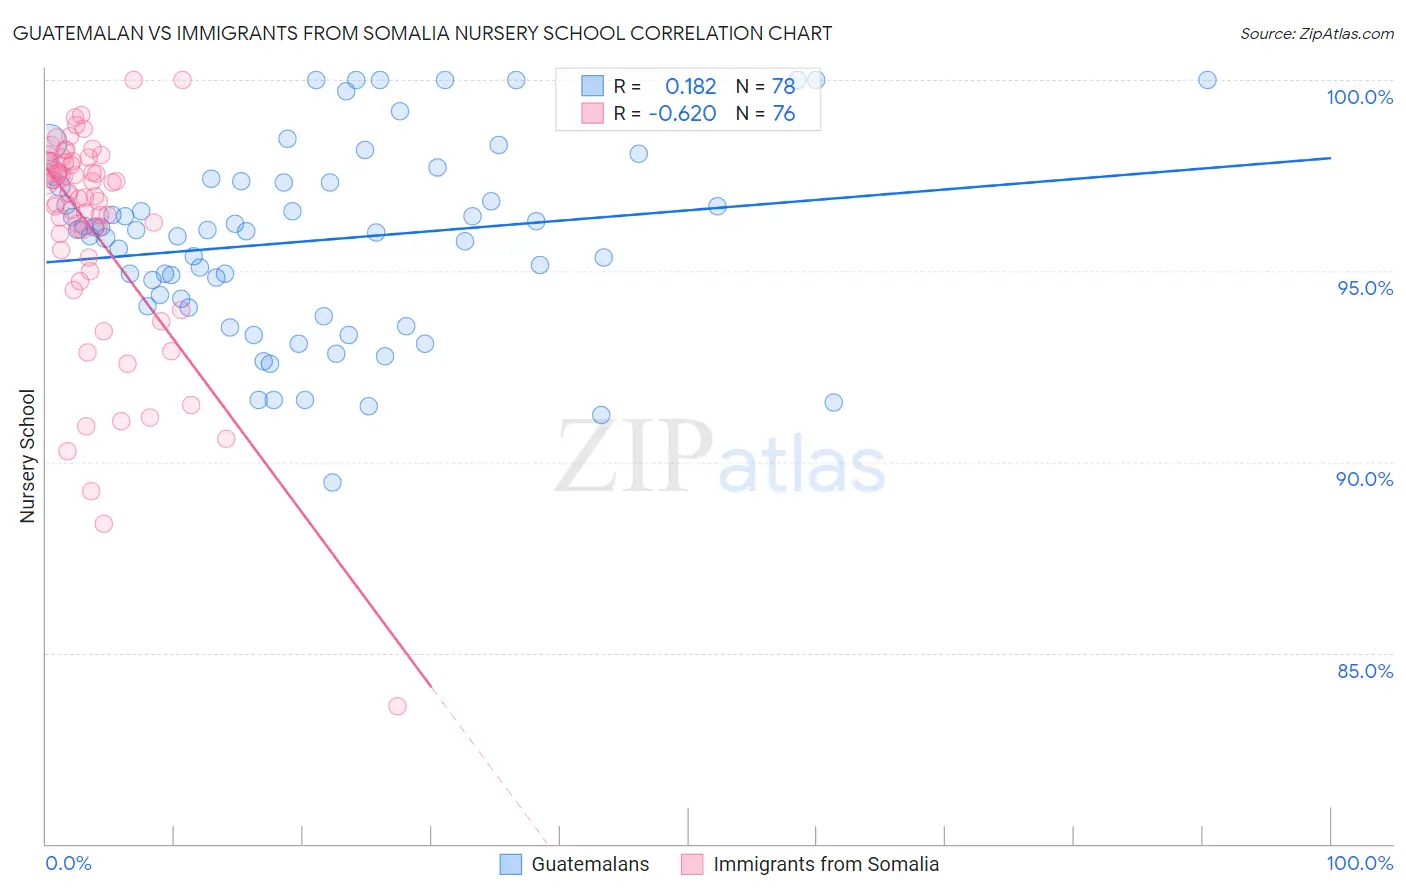 Guatemalan vs Immigrants from Somalia Nursery School